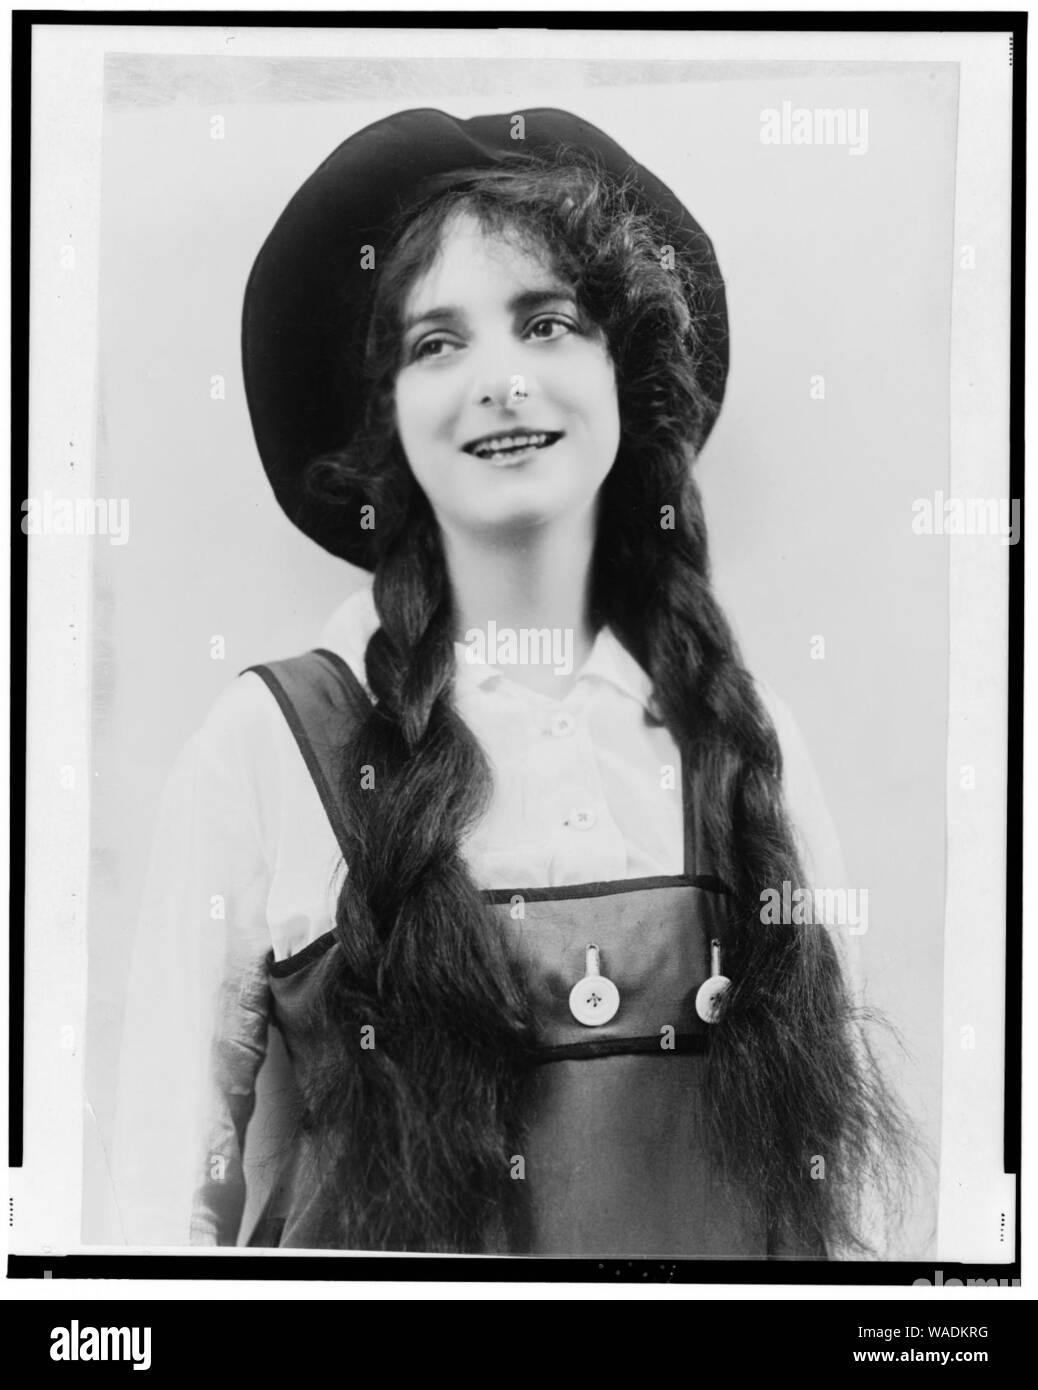 Dorothy Bernard, half-length portrait, in costume of jumper, hat, and braids Stock Photo